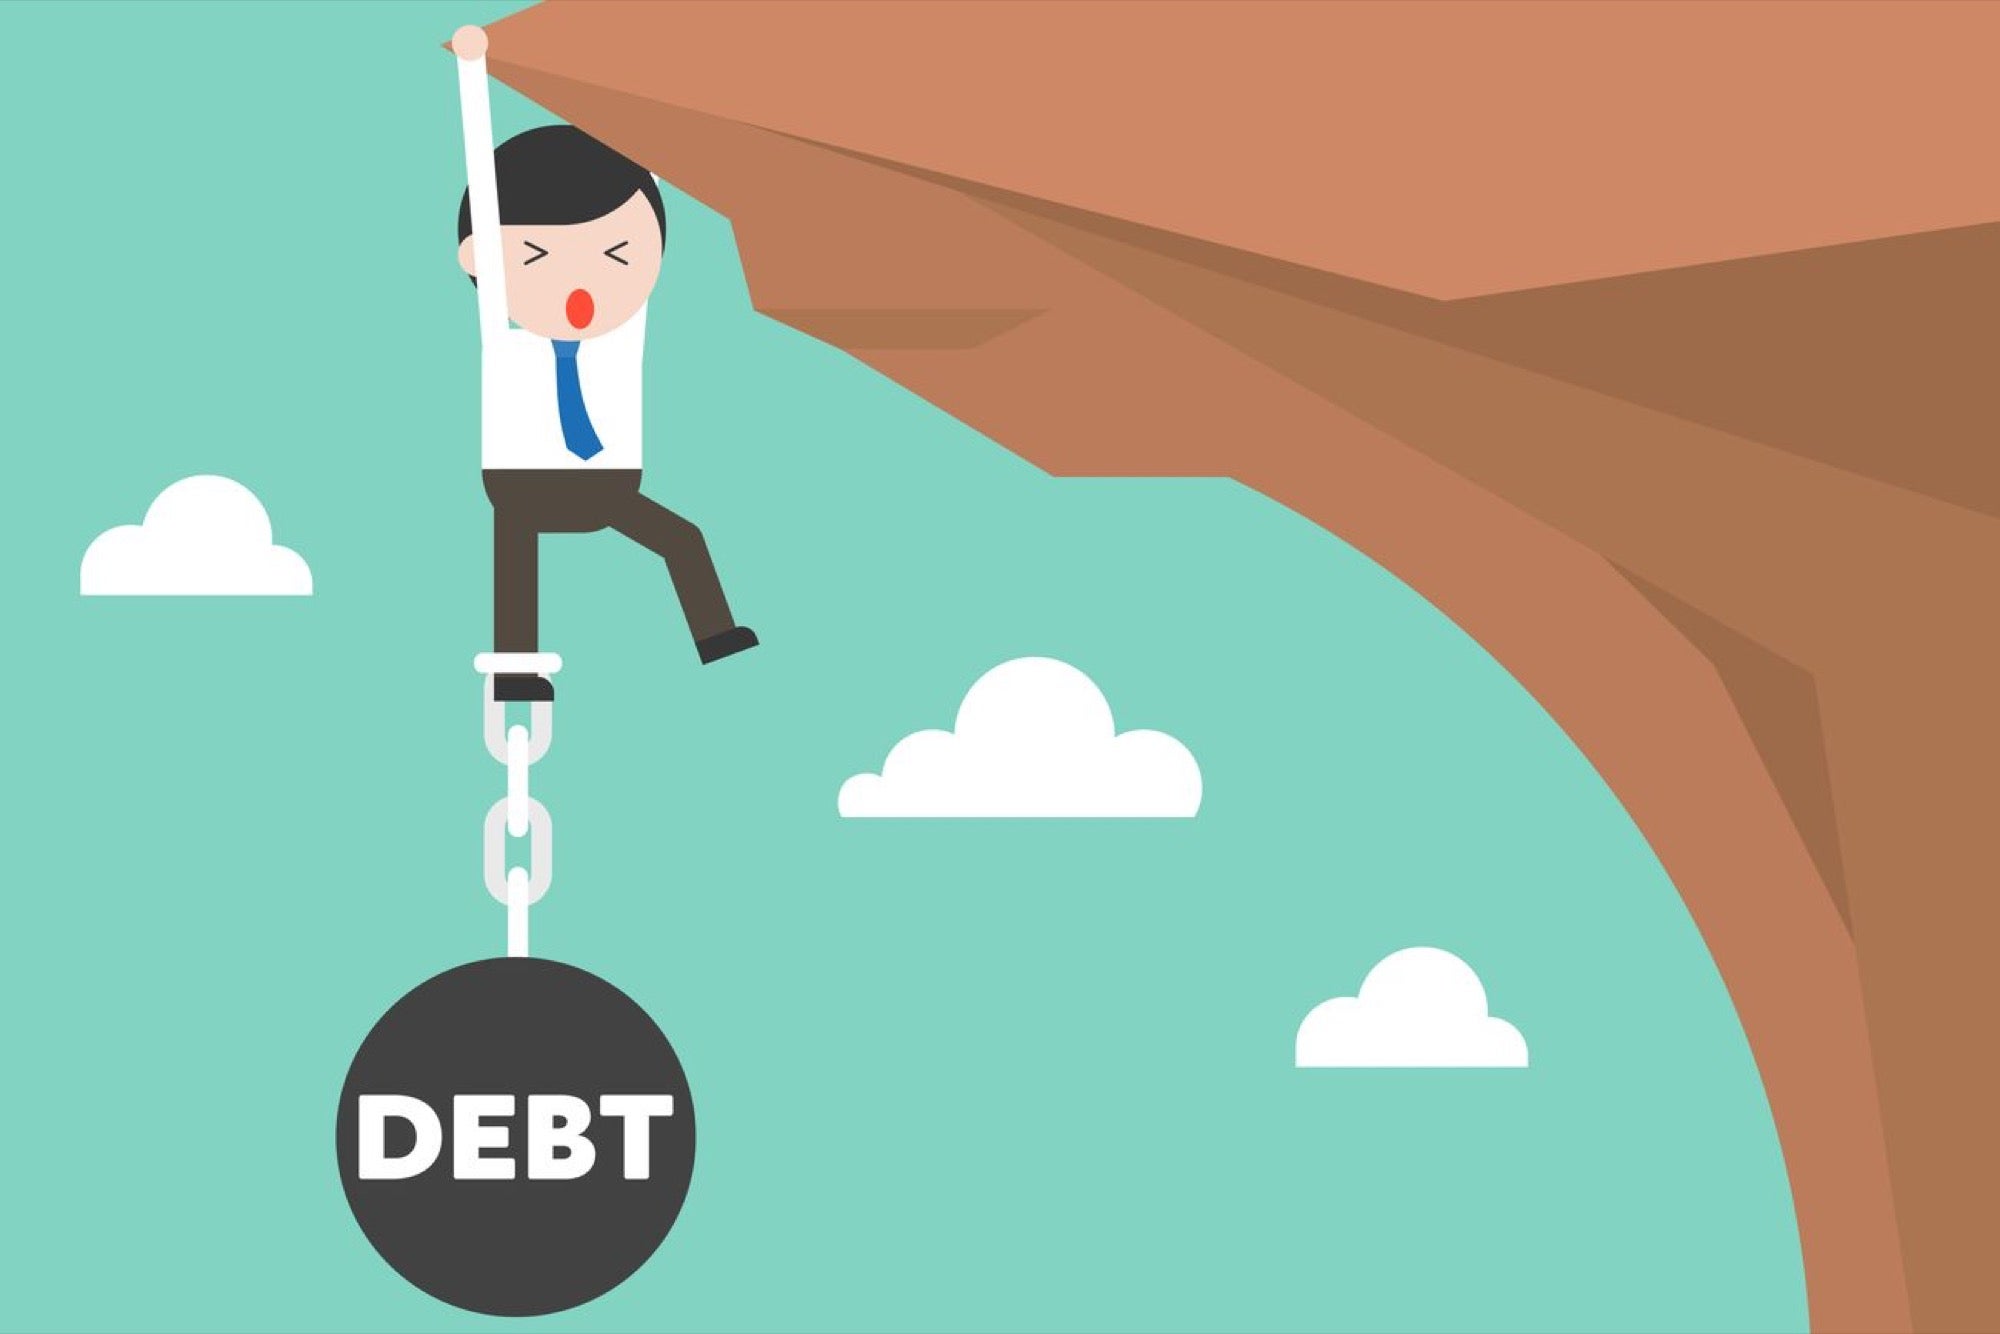 Learning debt